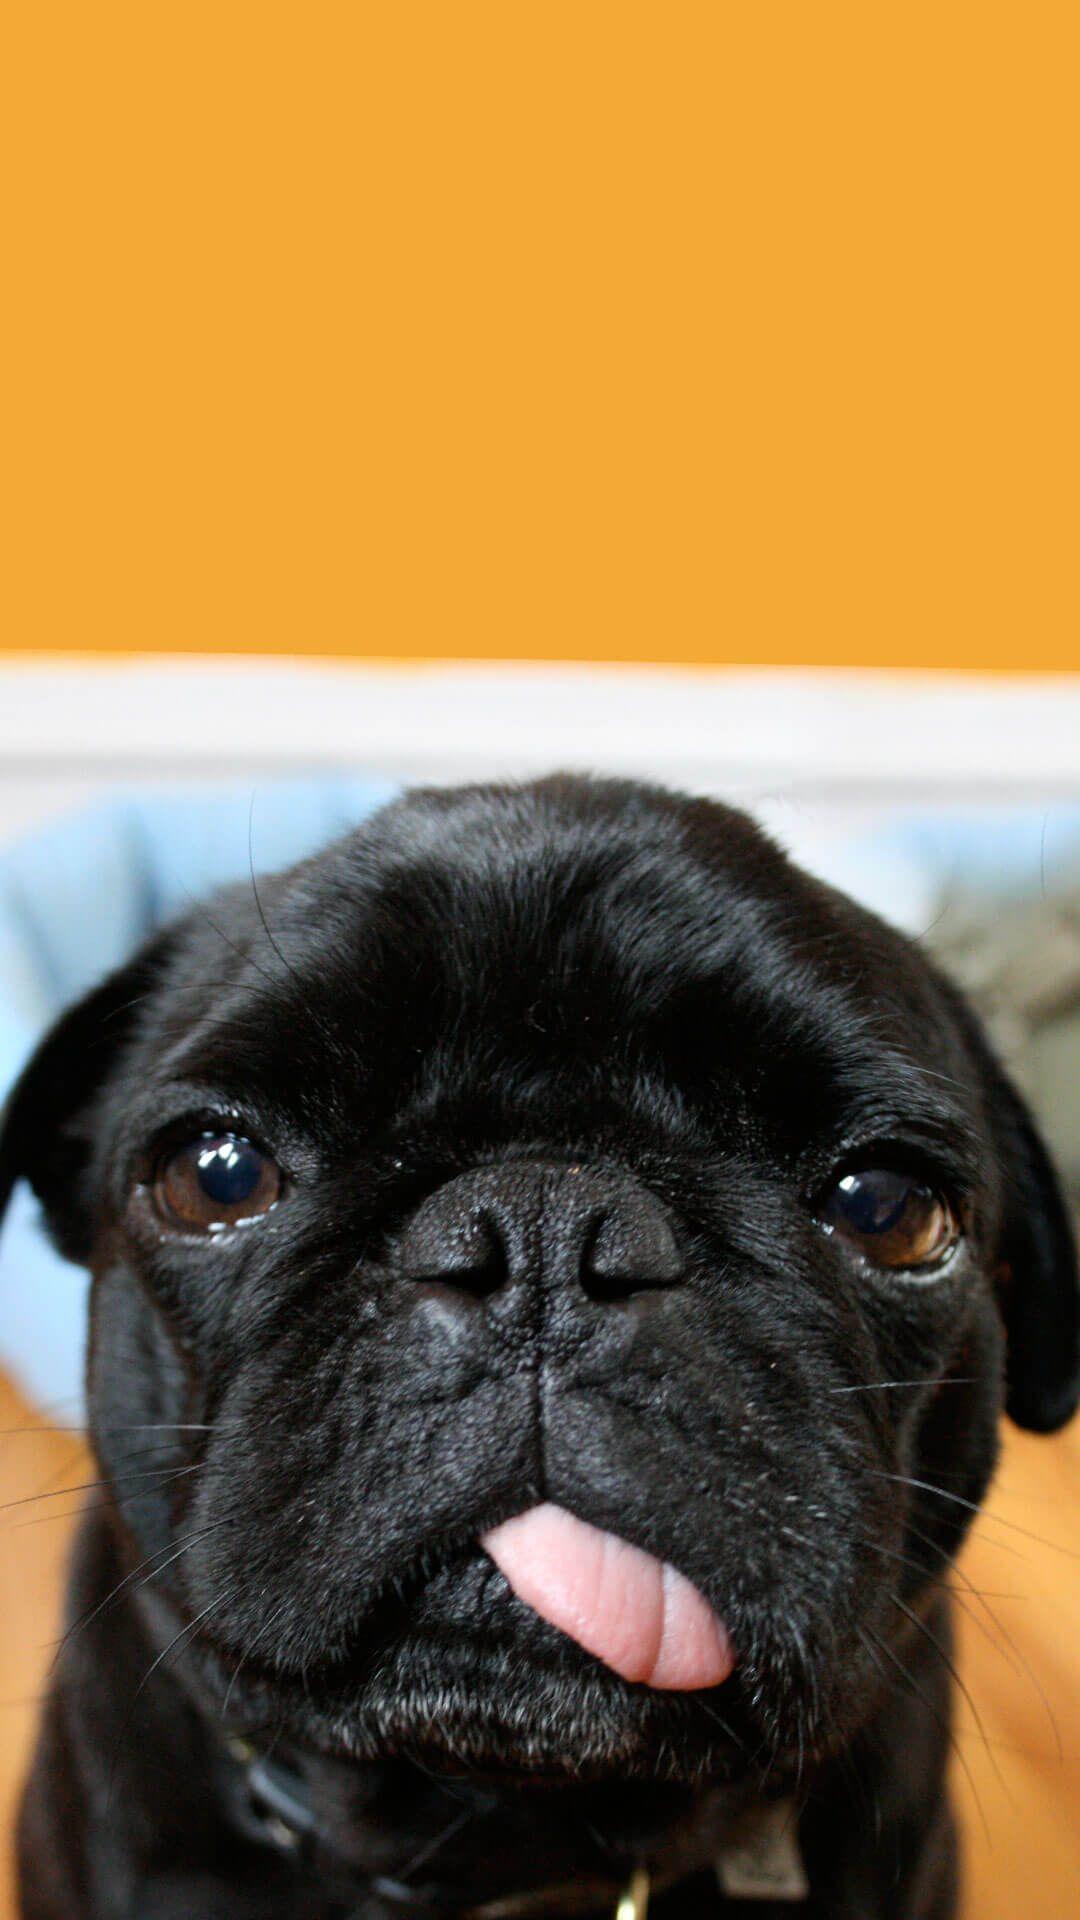 Cute Black Pug Wallpaper iPhone HD. Animal Wallpaper for iPhone